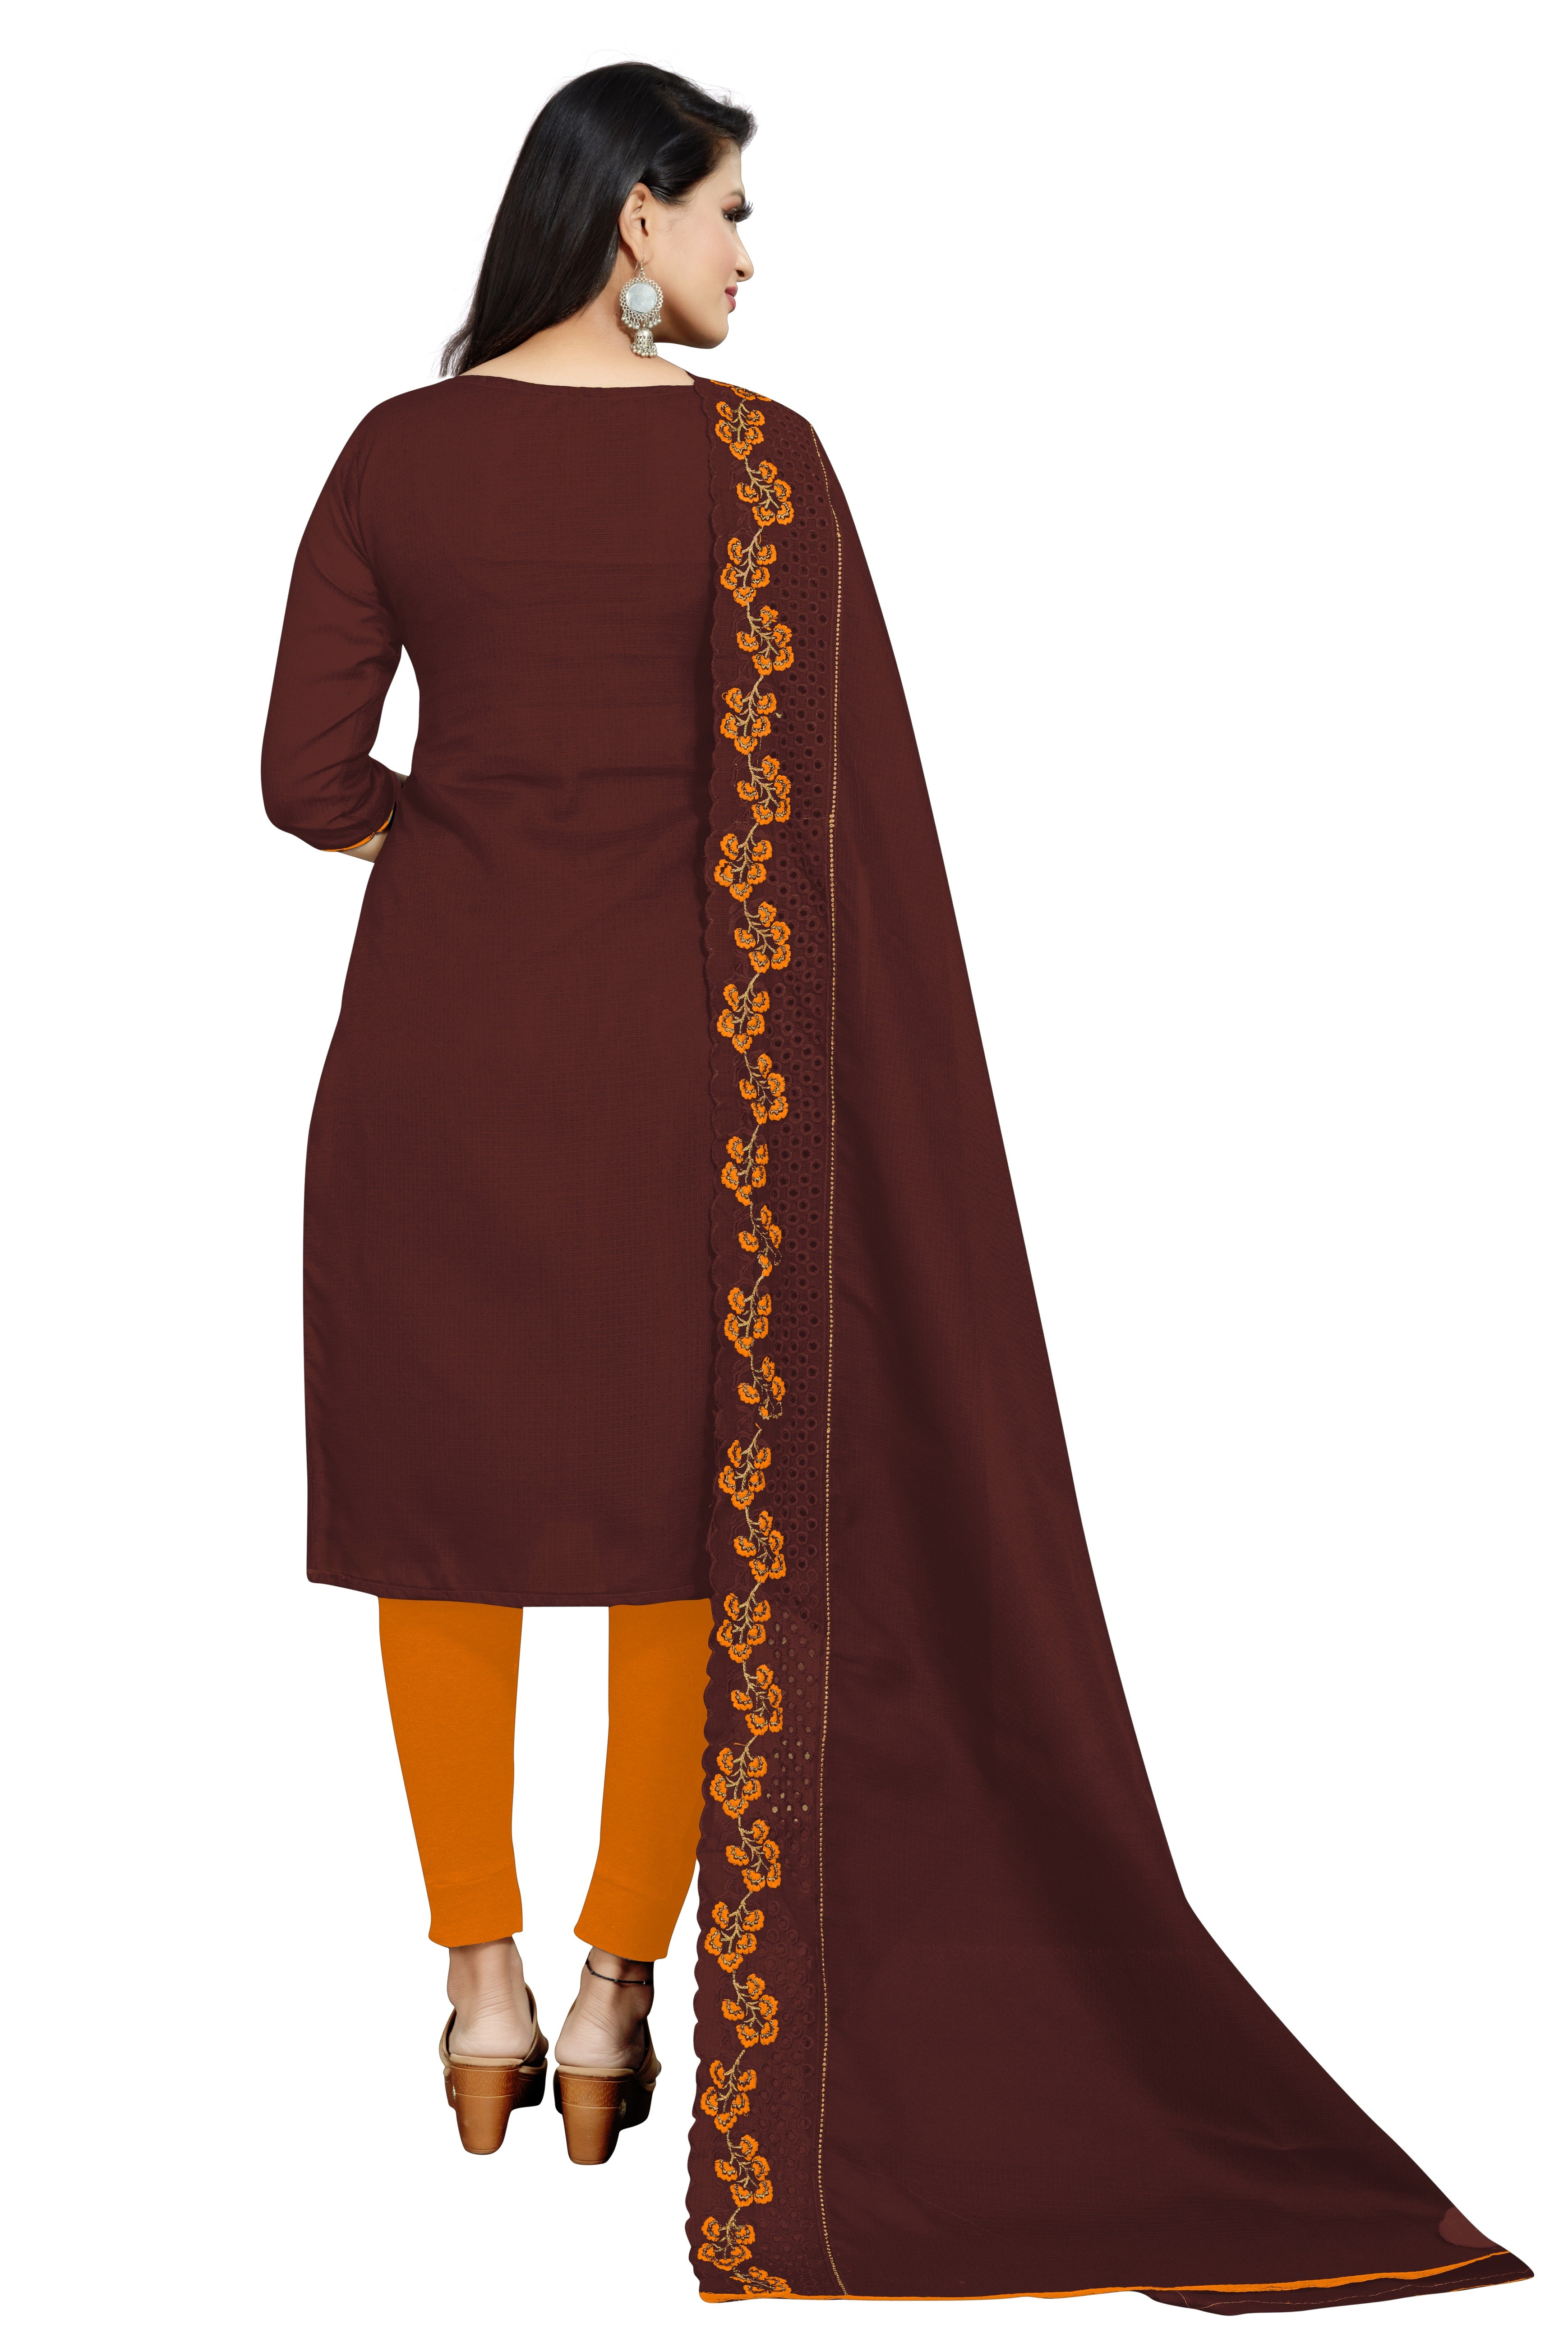 Women's Maroon Colour Semi-Stitched Suit Sets - Dwija Fashion